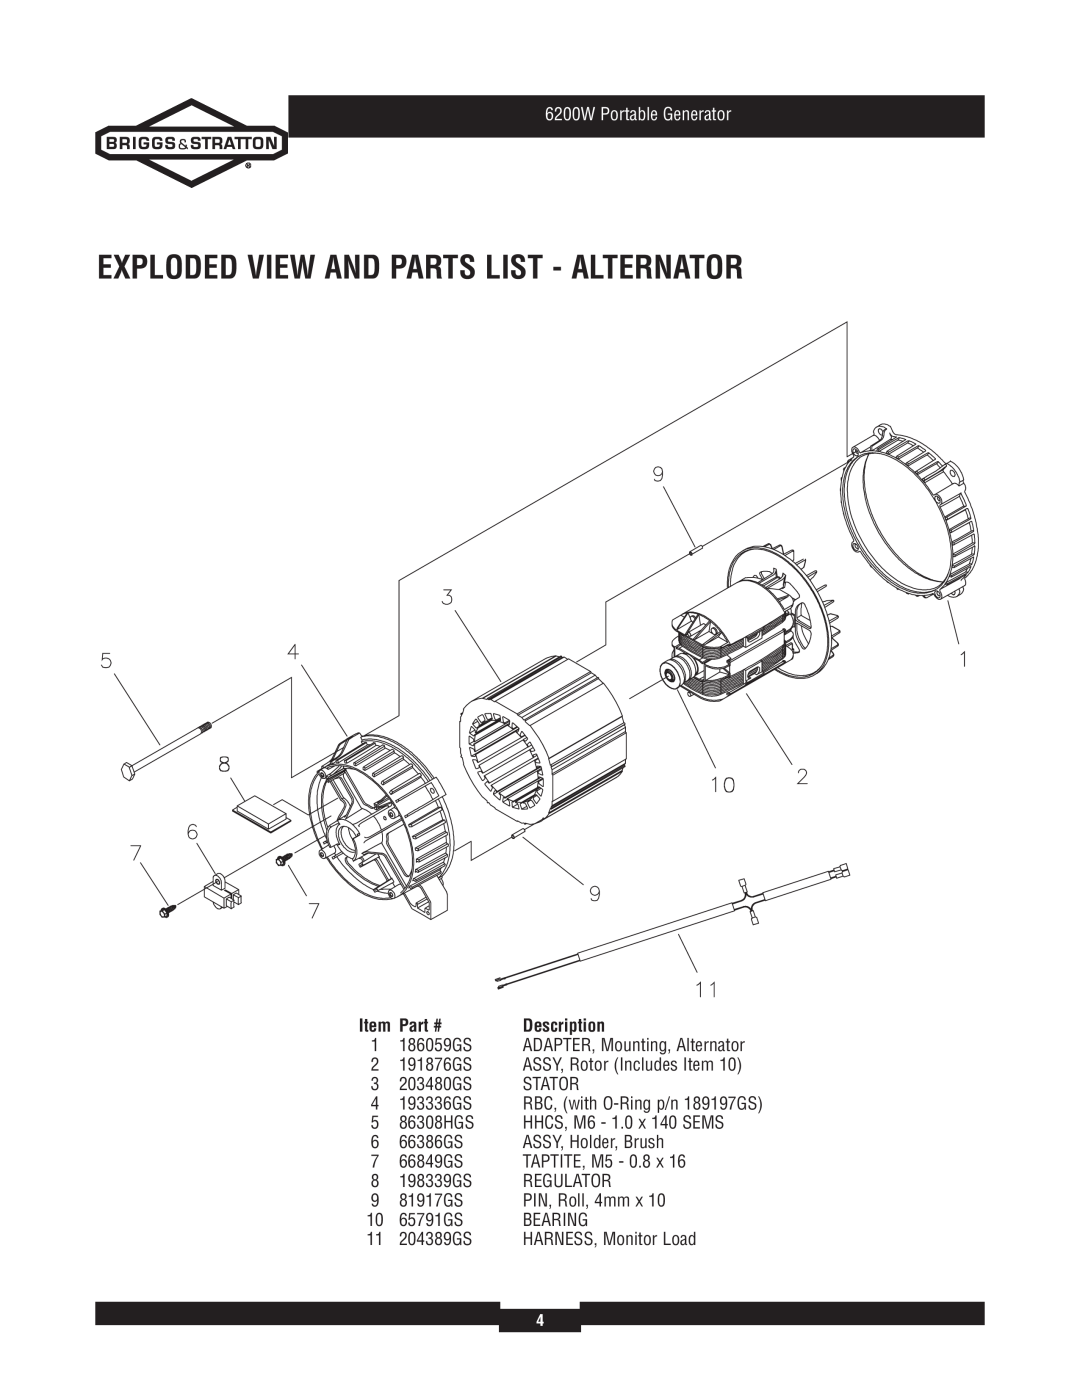 Briggs & Stratton 30358 manual Exploded View And Parts List - Alternator, 186059GS, 6200W Portable Generator, Description 